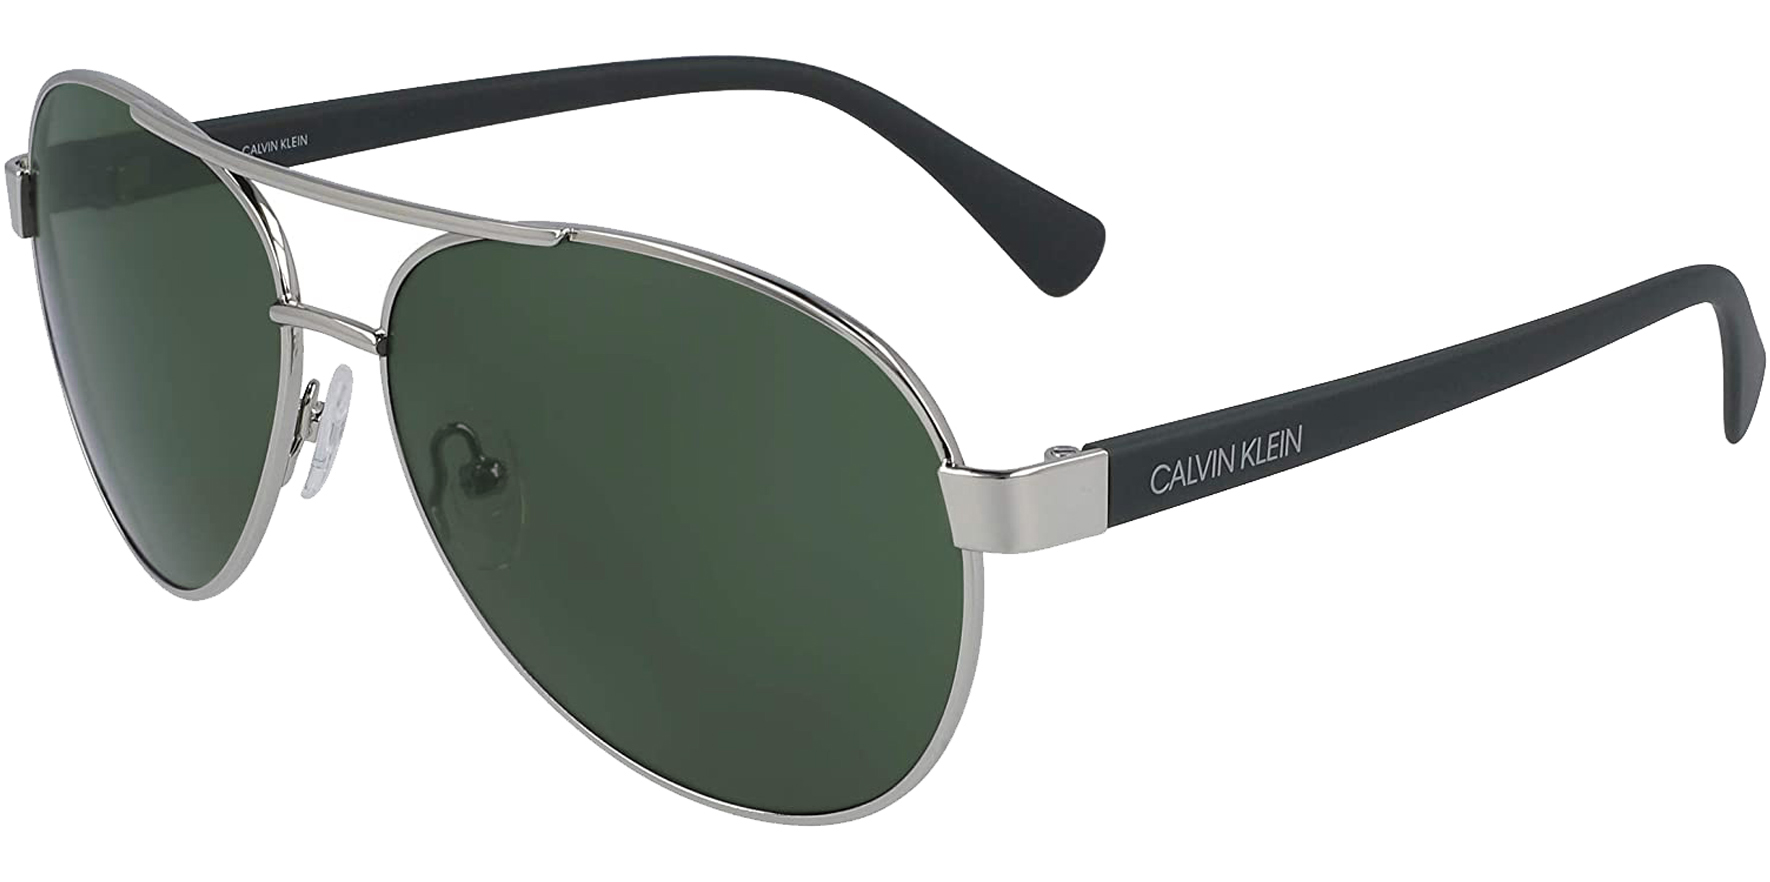 Calvin Klein Sunglasses (various styles)